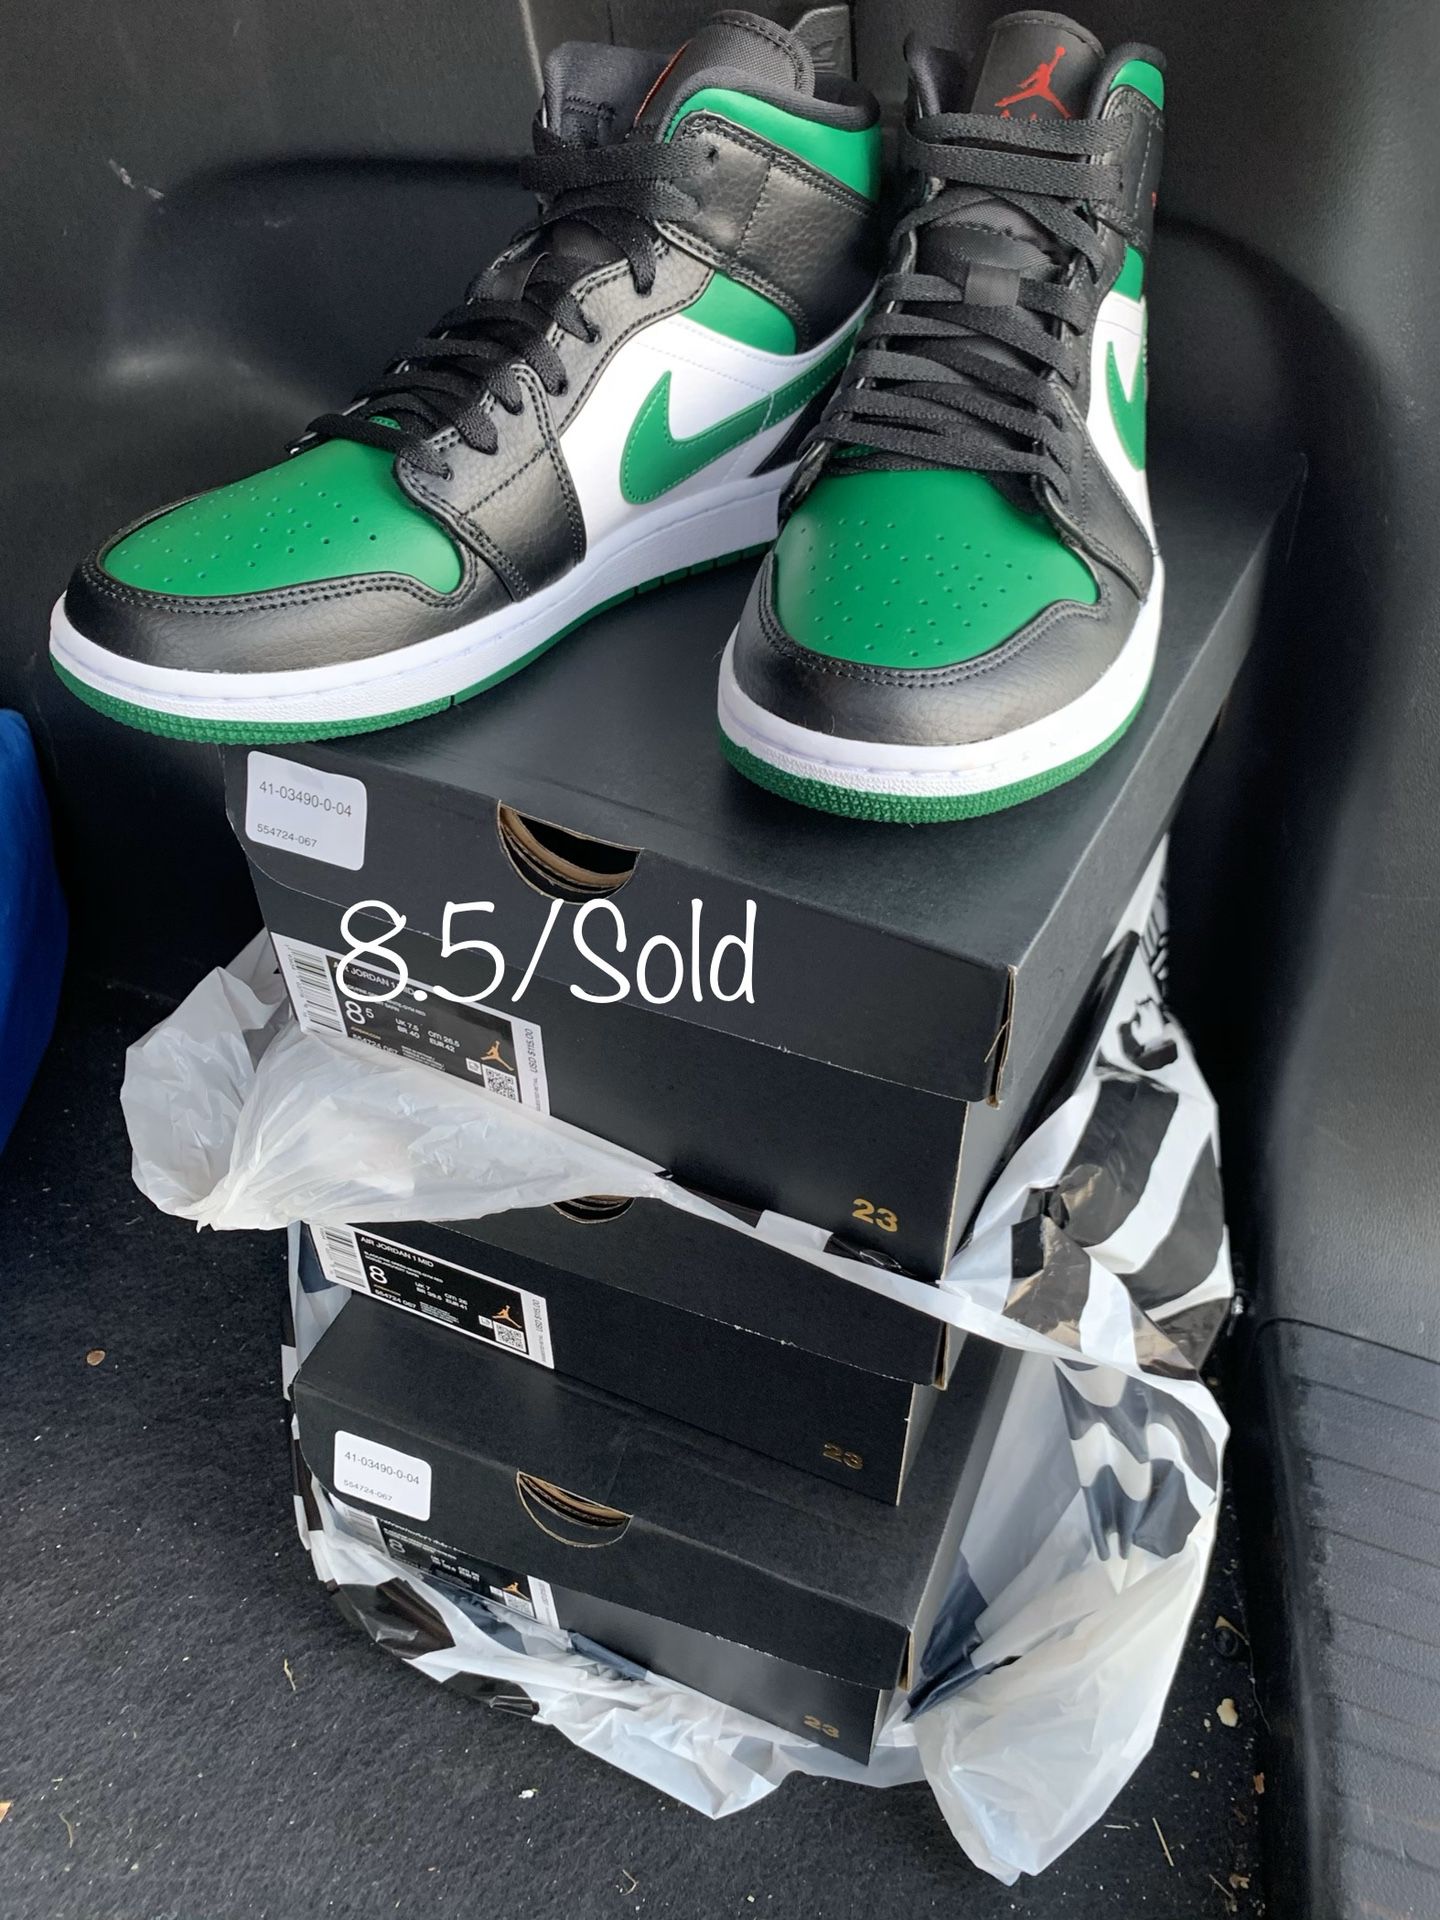 DS Jordan 1 Mid Green Toe - sz 8 (2 available)